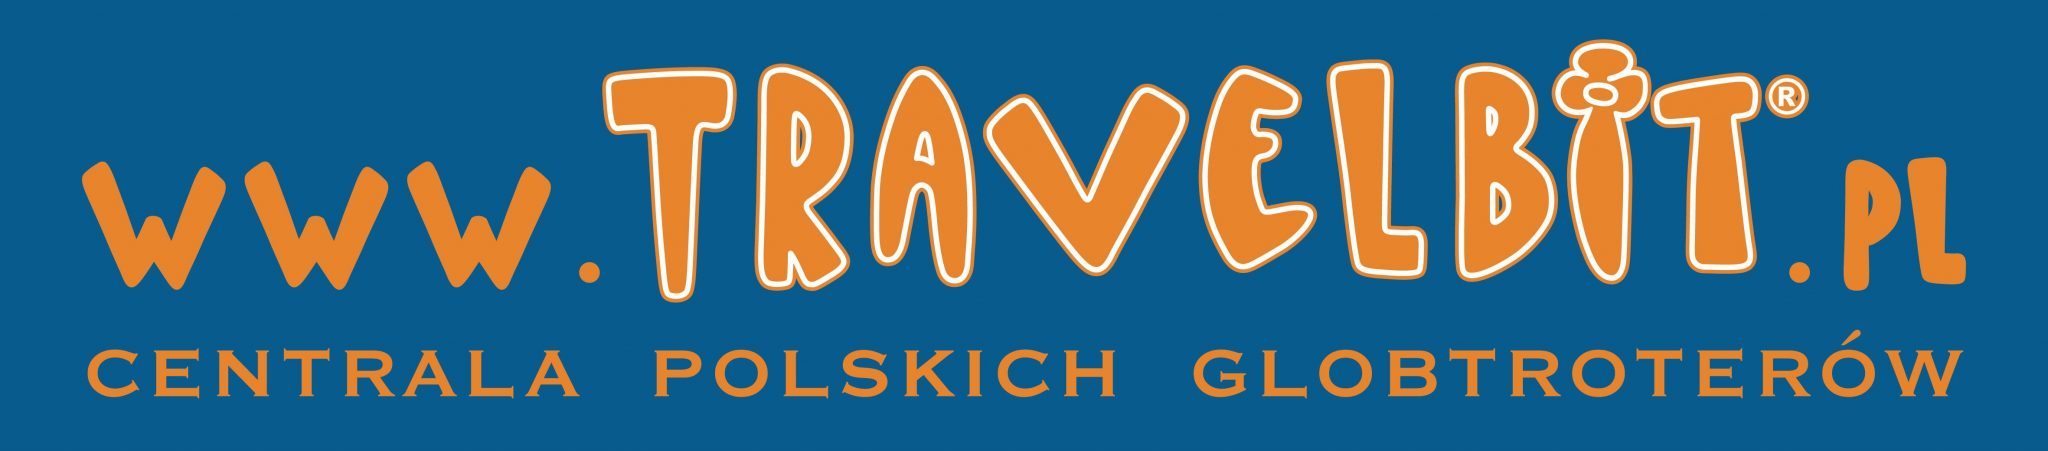 travelbit logo